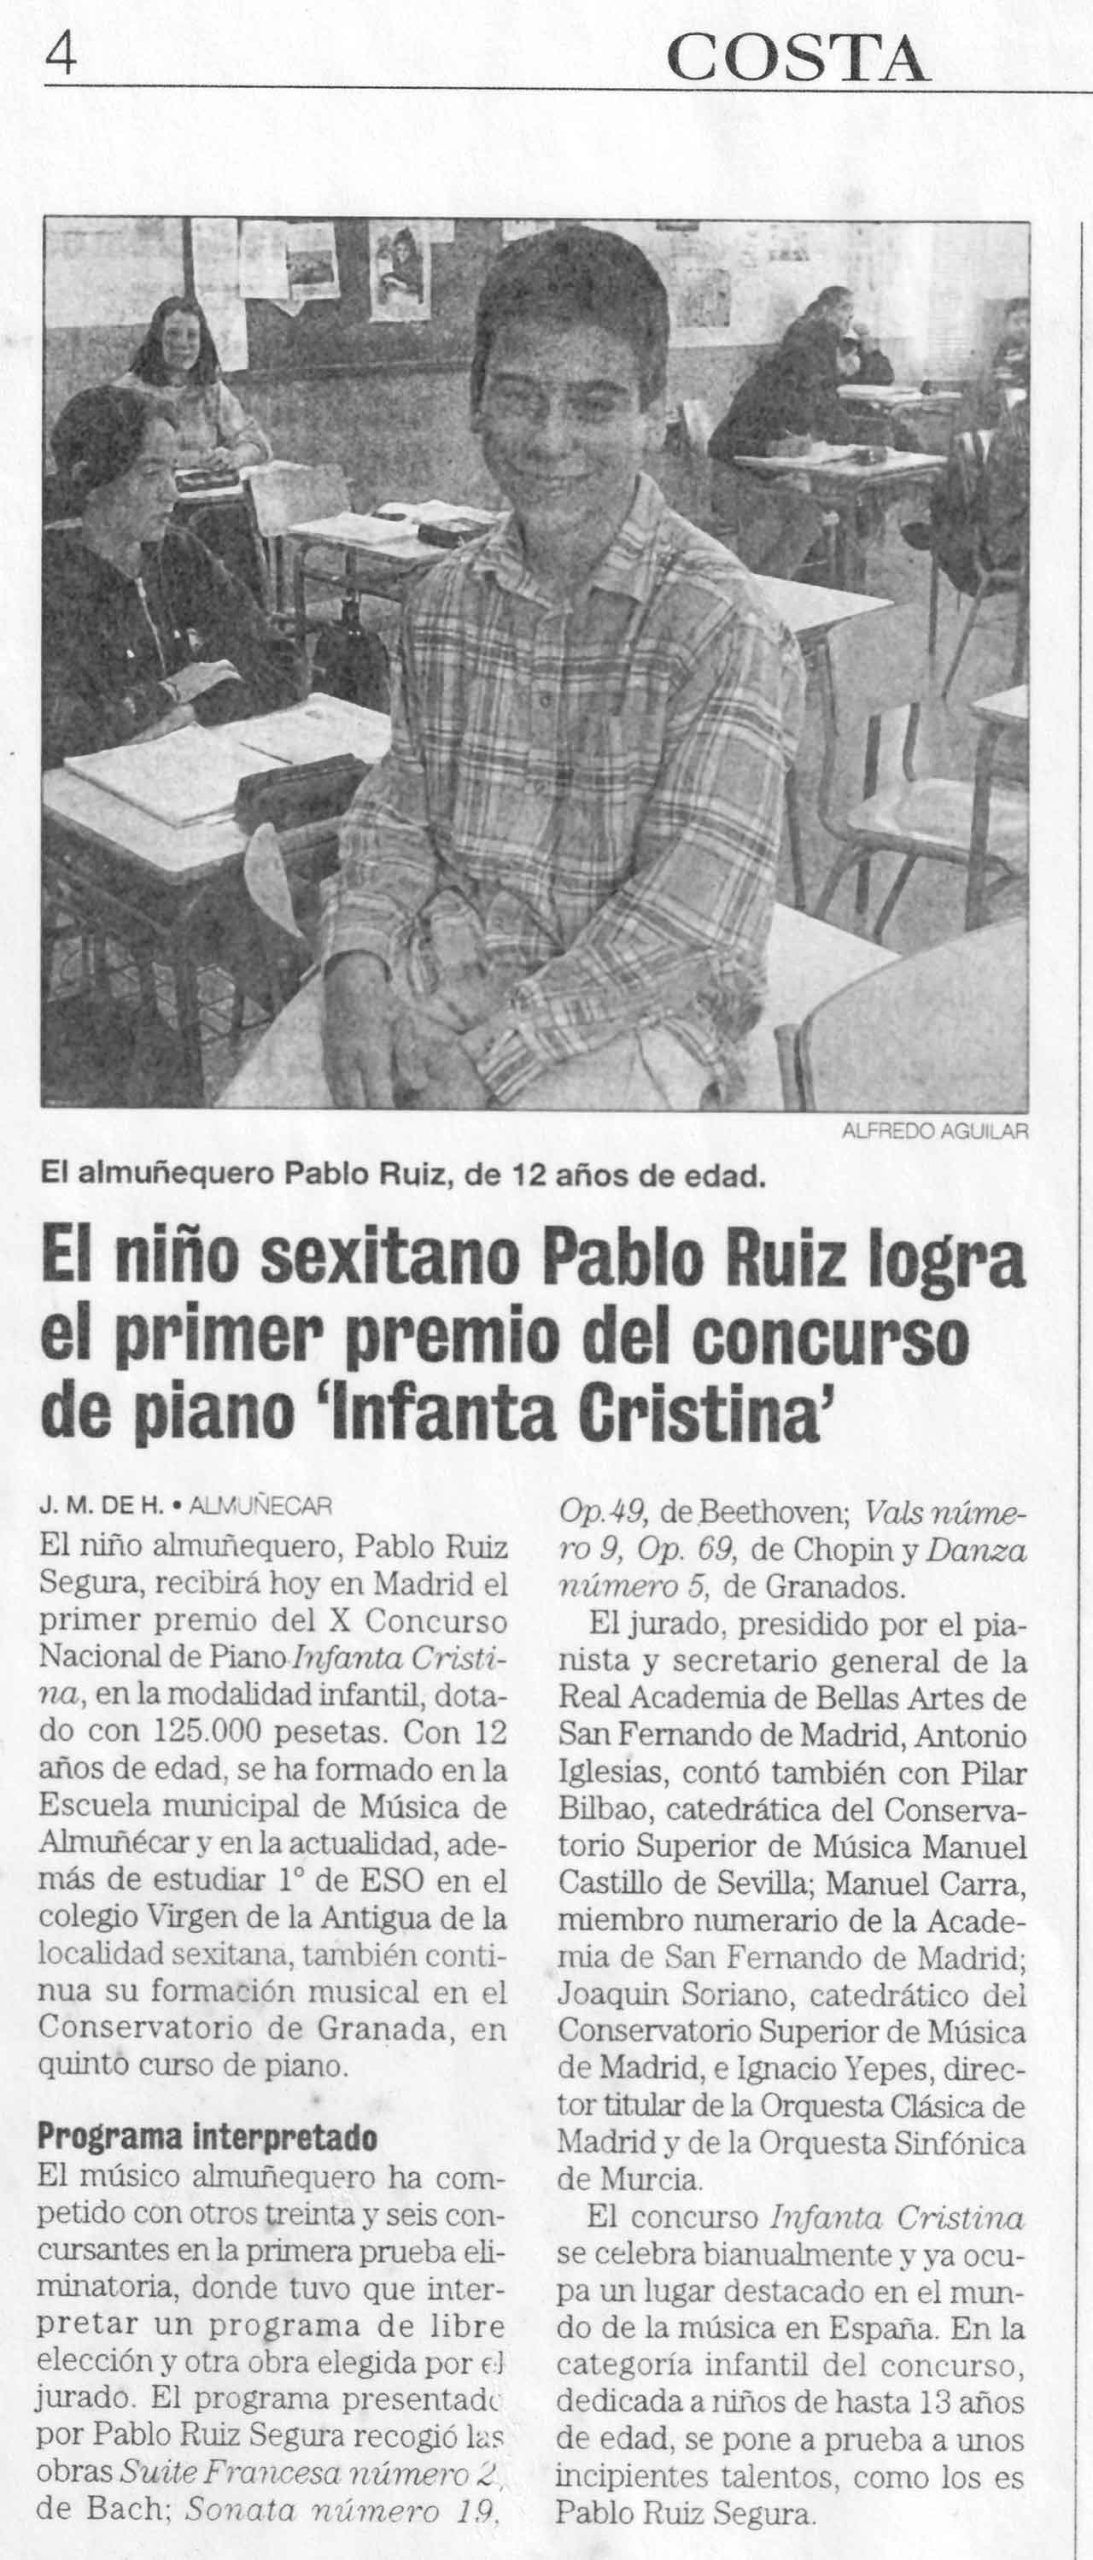 Pablo Ruiz Segura in Costa Tropical newspaper